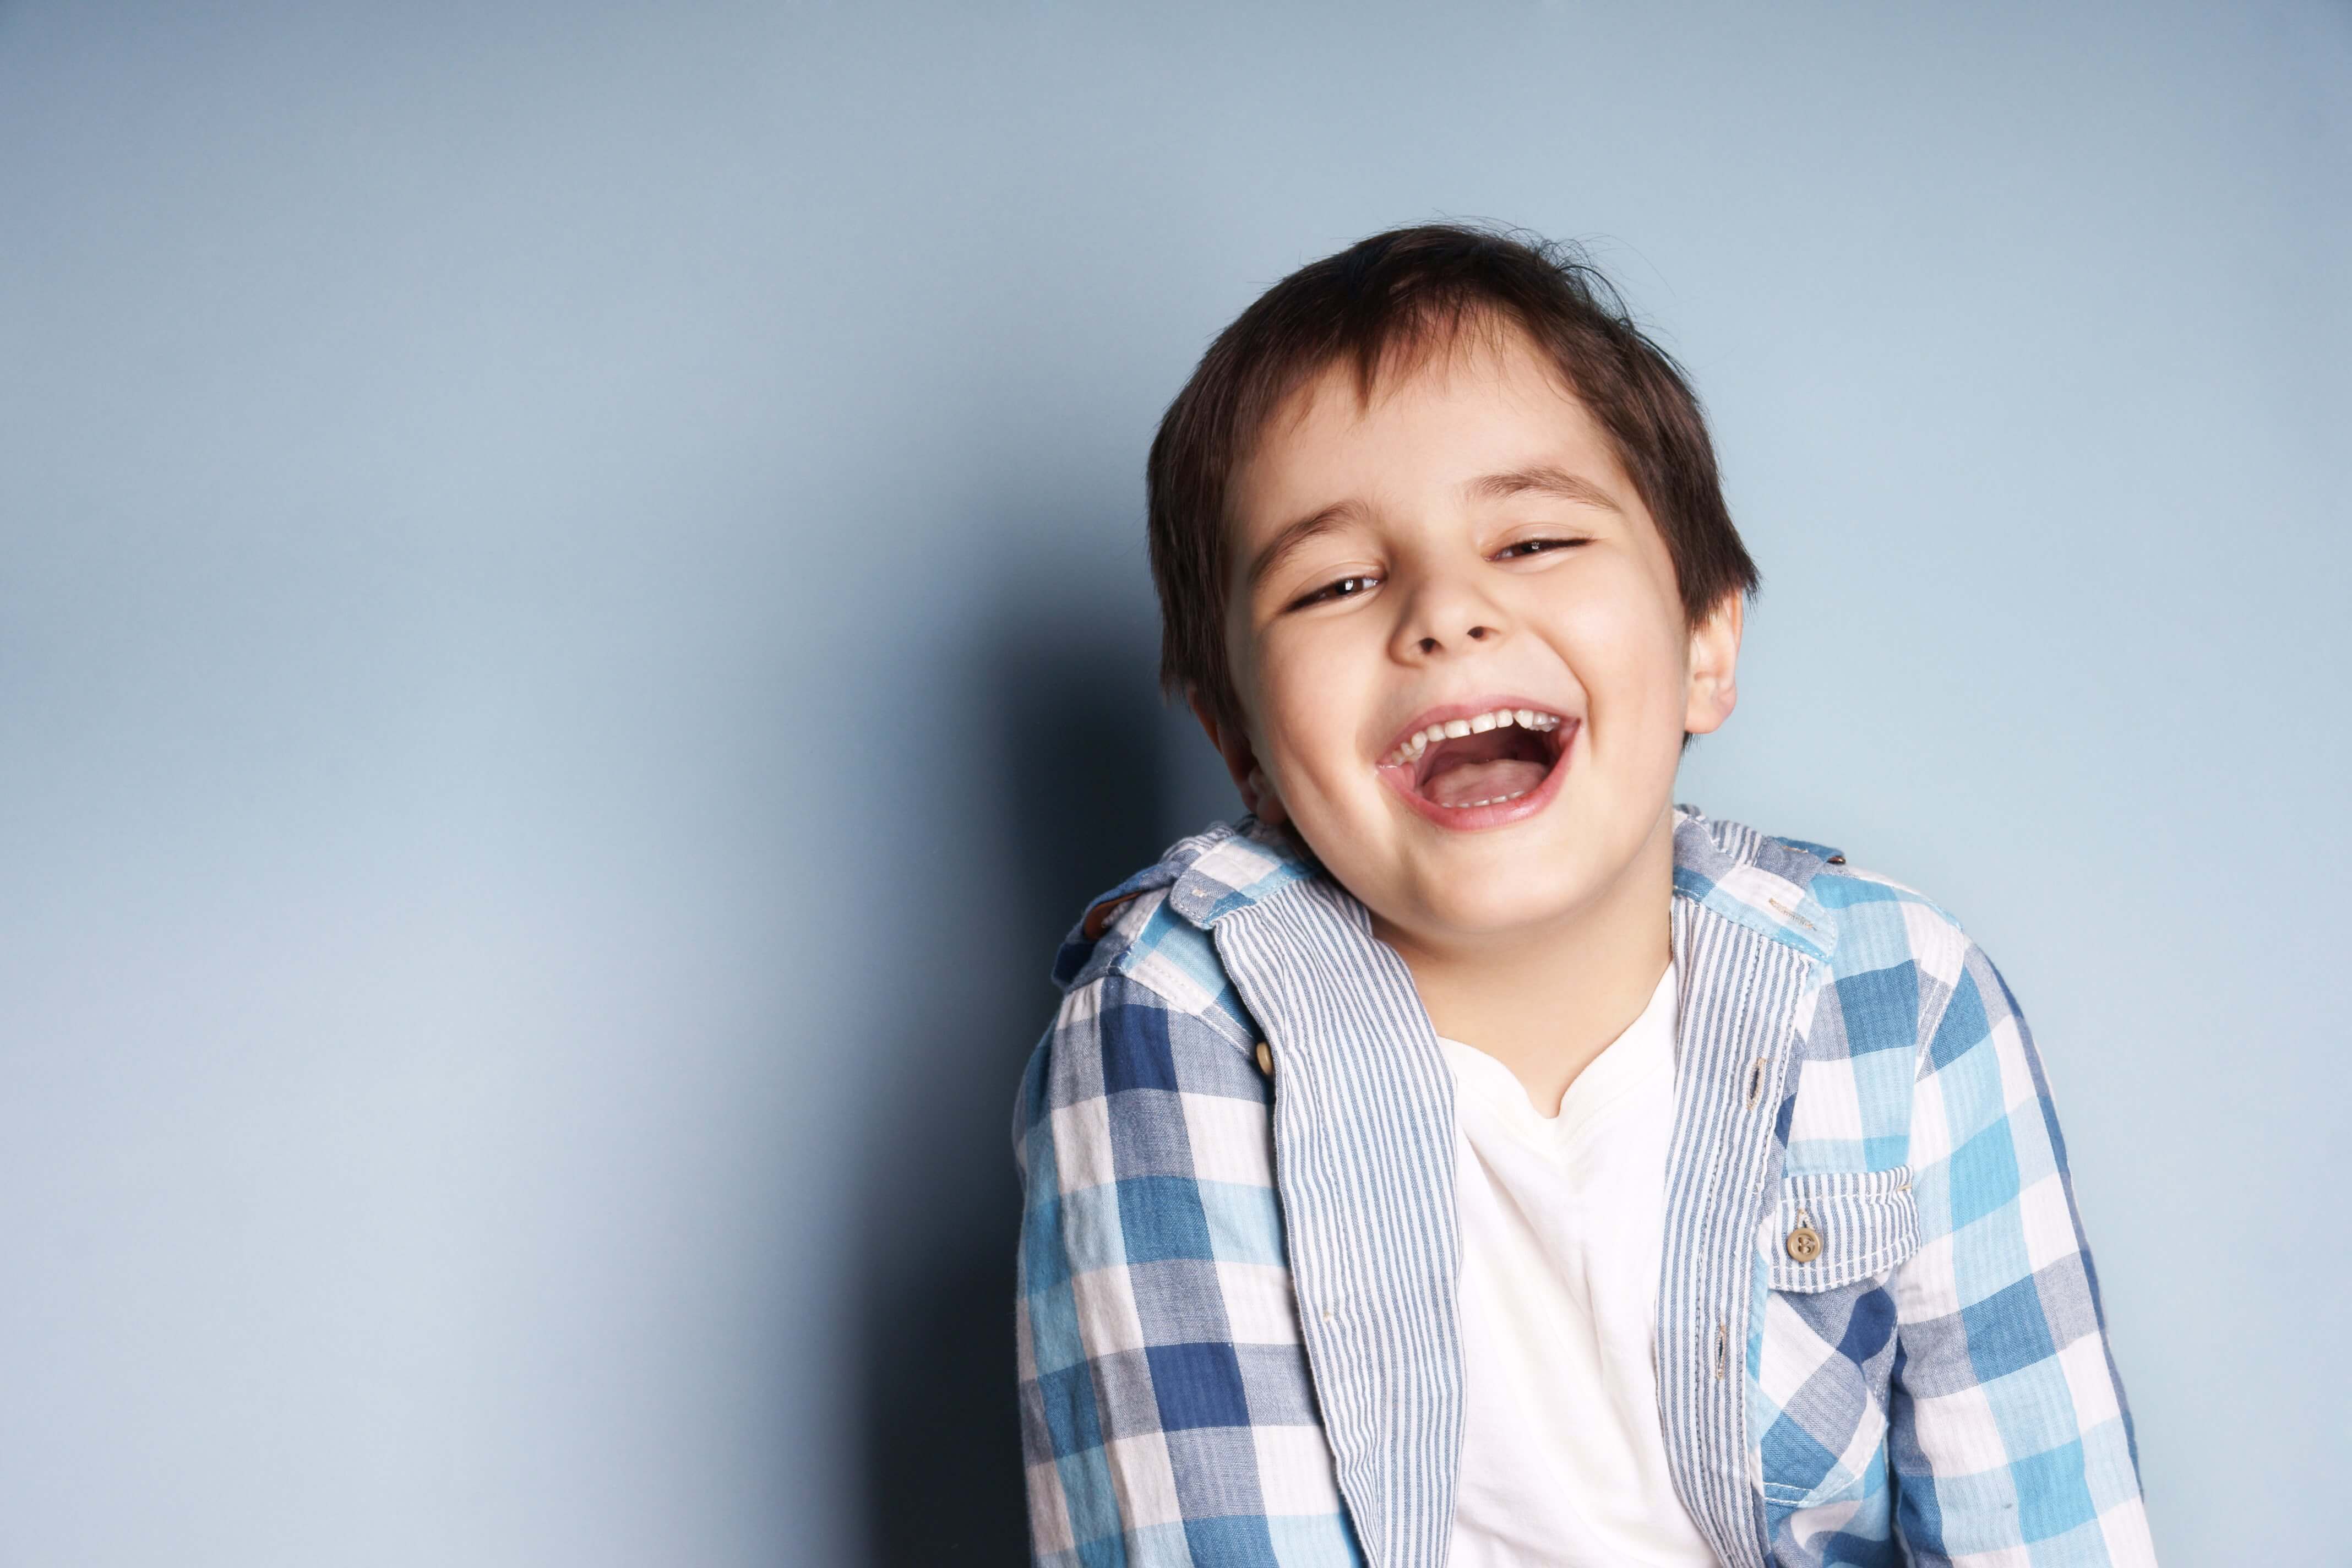 Portrait of happy, joyful laughing boy